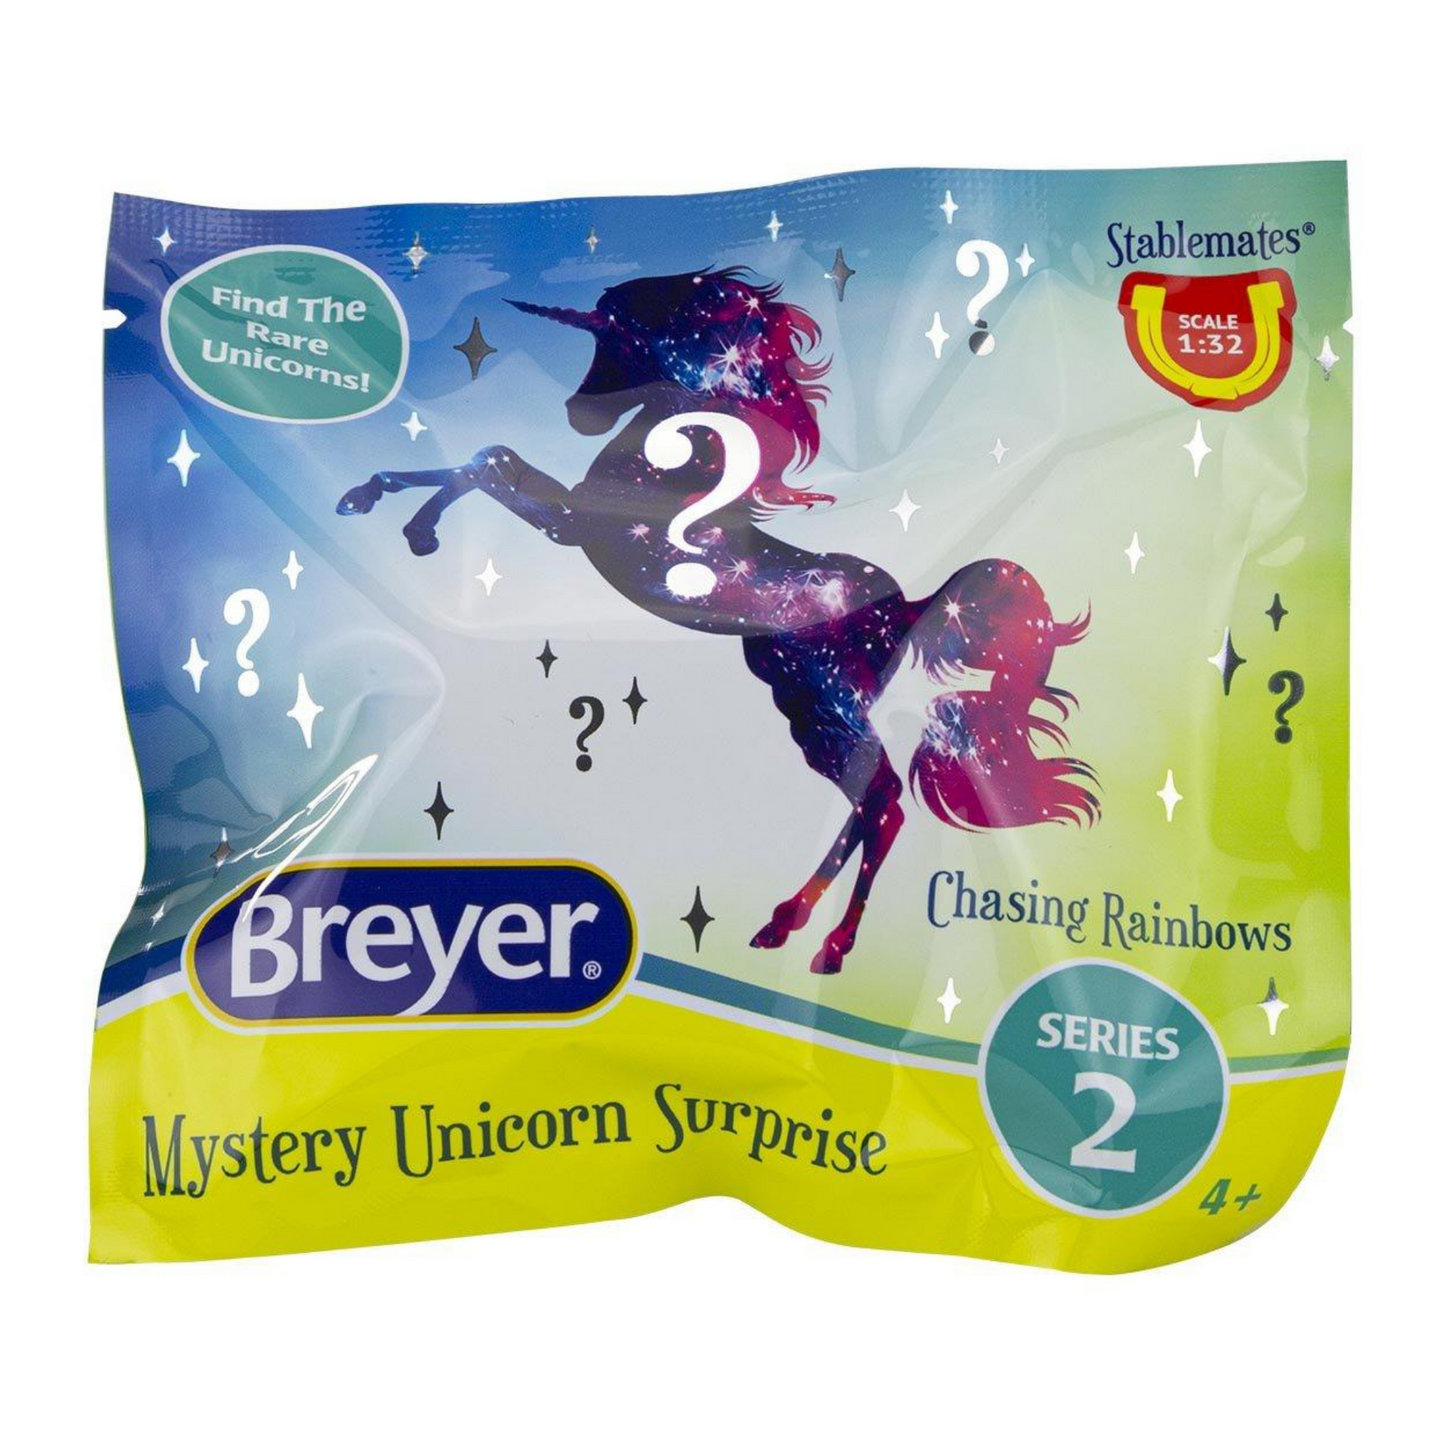 Breyer Stablemates Mystery Unicorn Surprise,  Chasing Rainbows